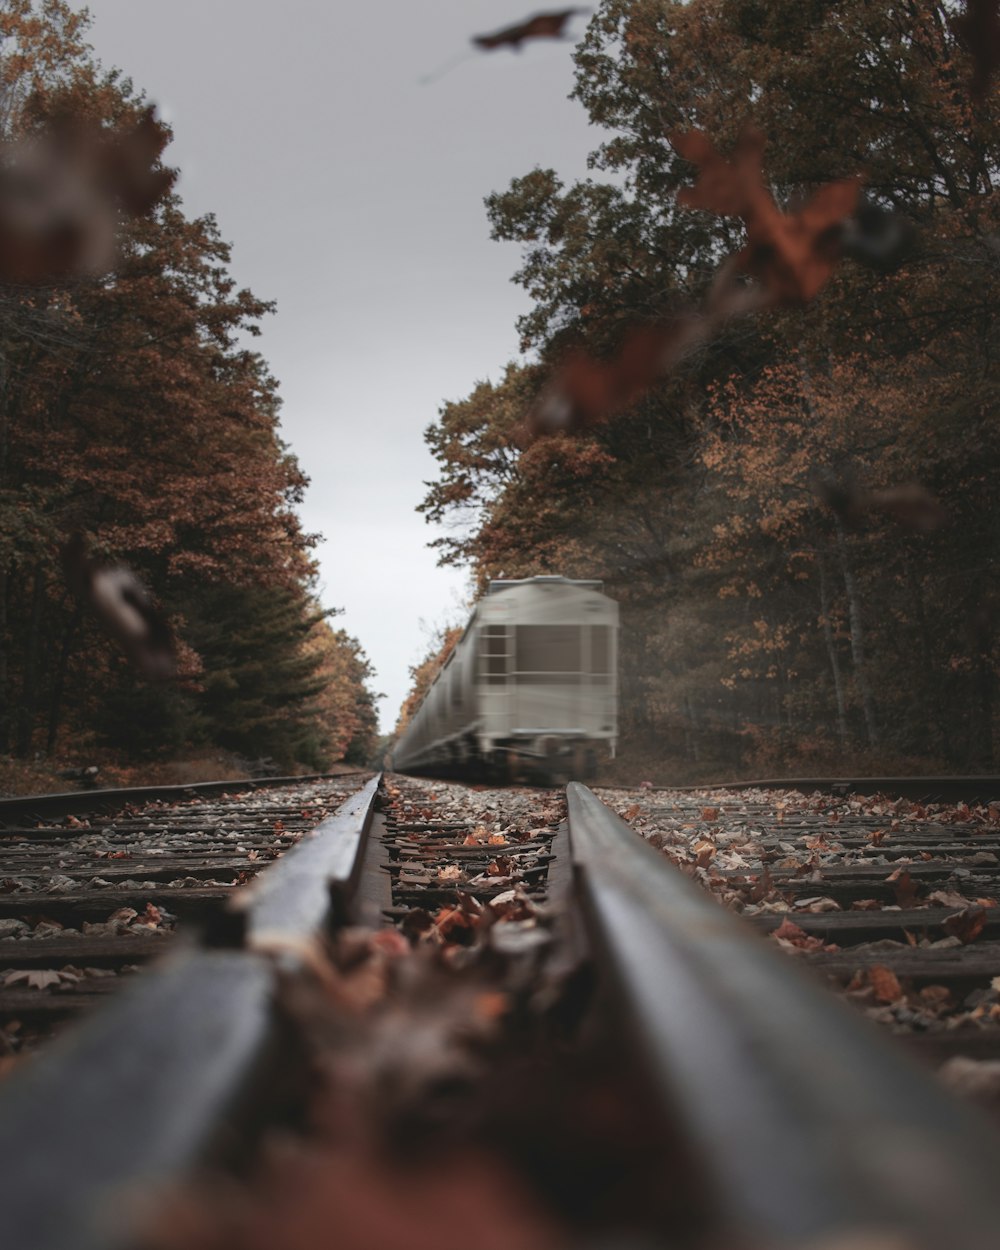 grey train on railway during daytime